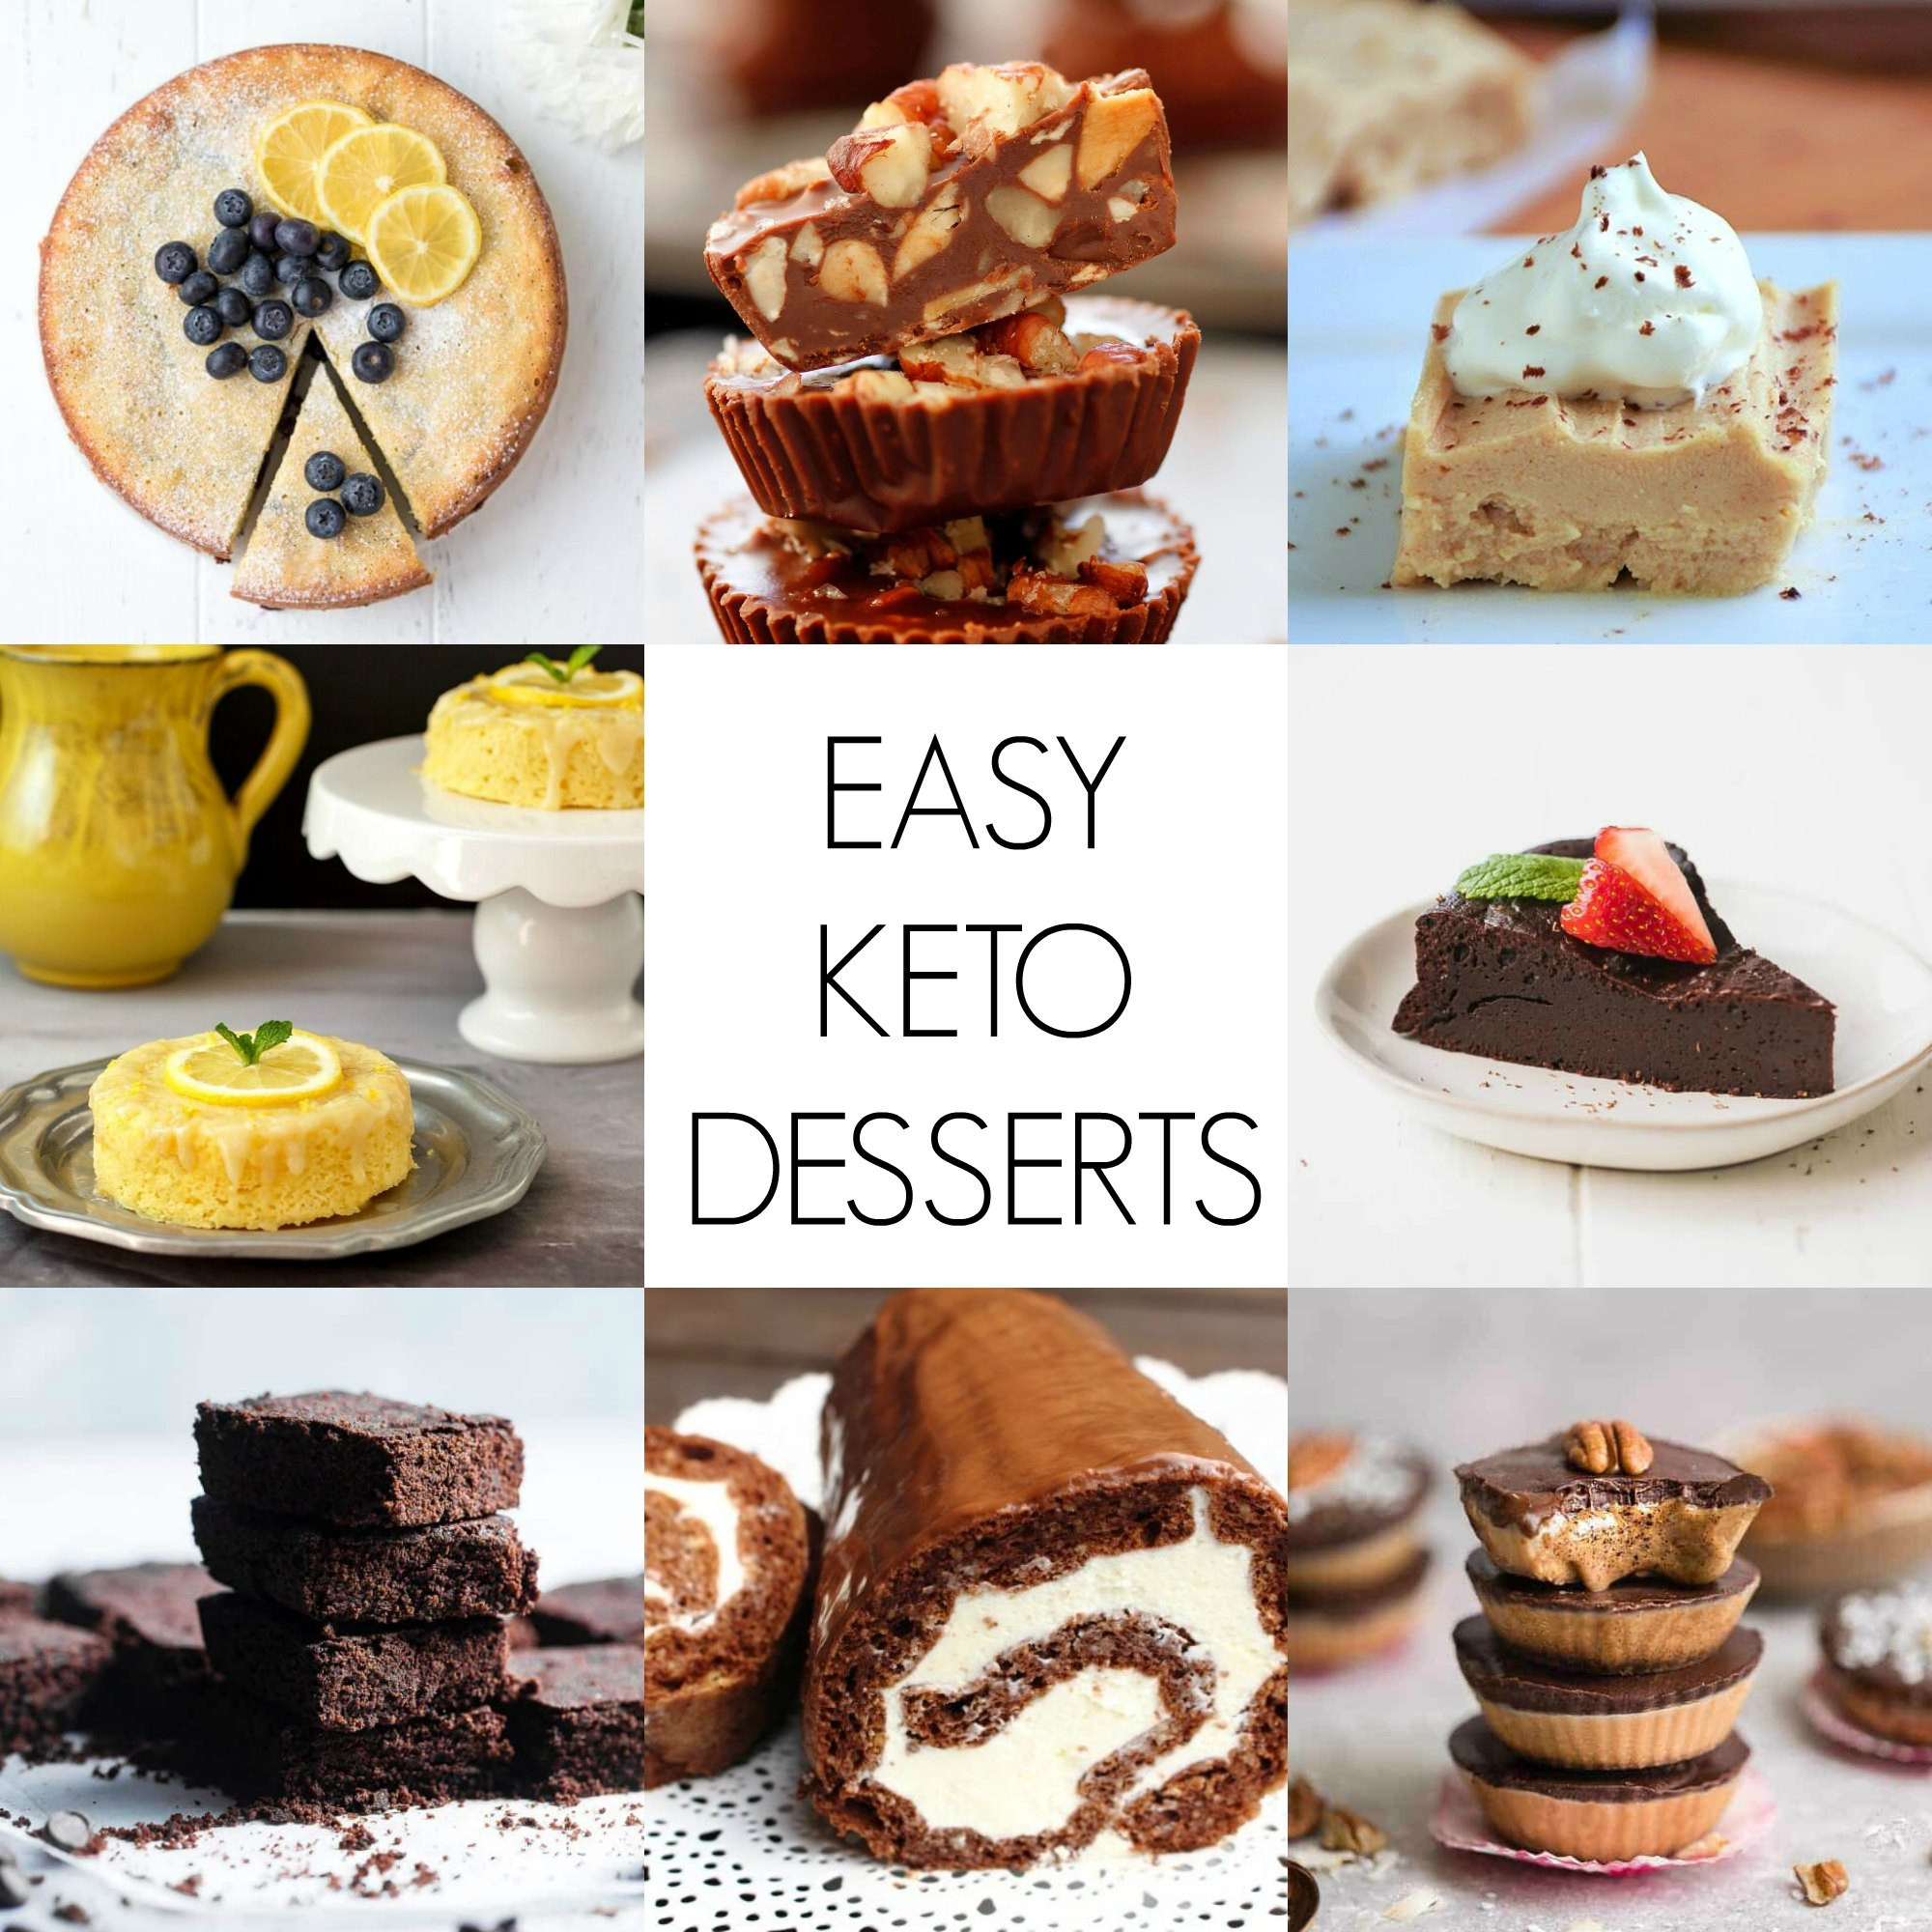 Easy Keto Dessert Recipes
 Easy Keto Desserts 15 quick and easy keto desserts